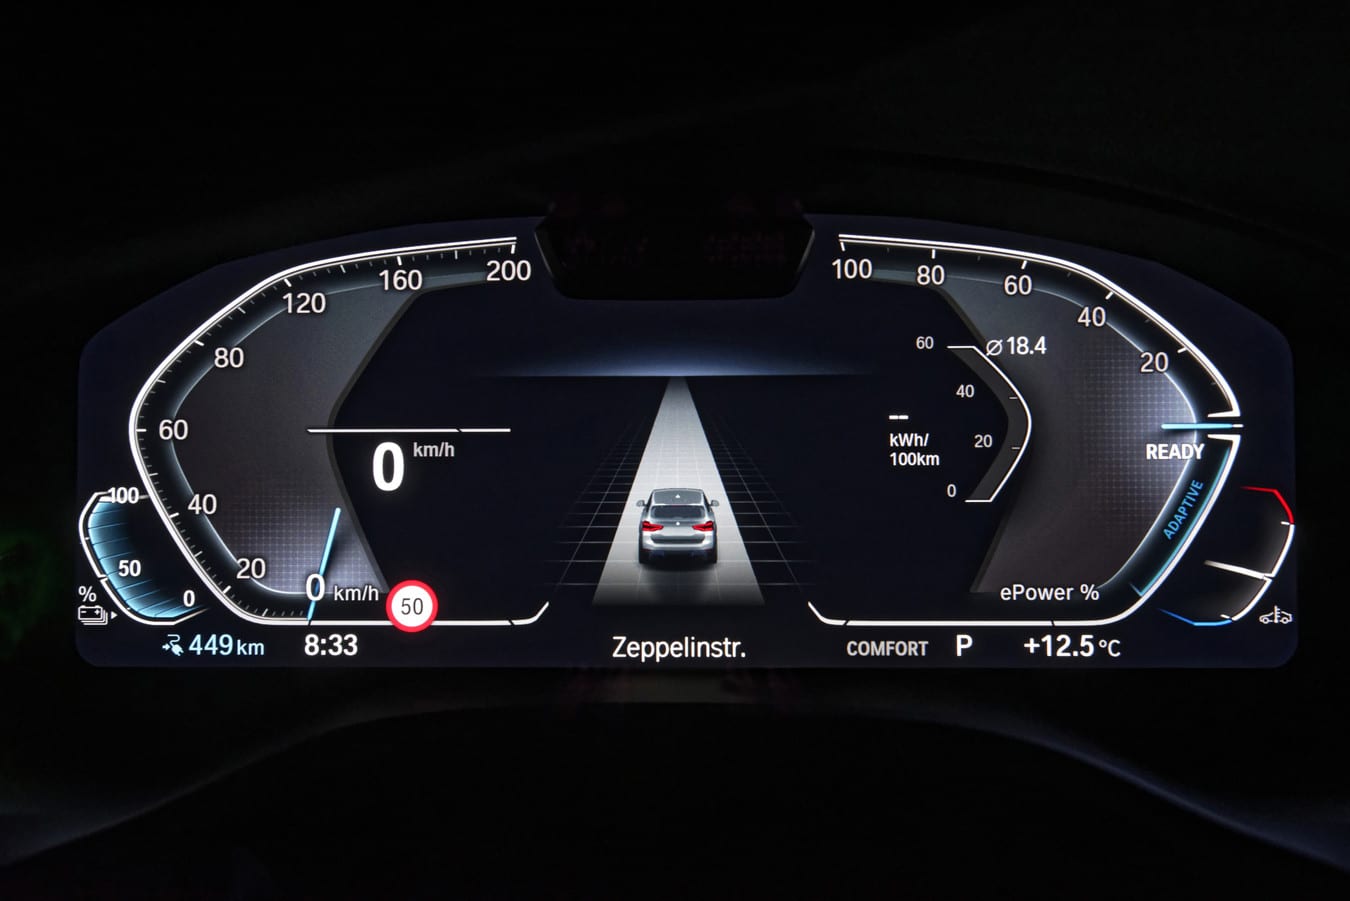 BMW iX3 Instrument Dashboard Display Screen